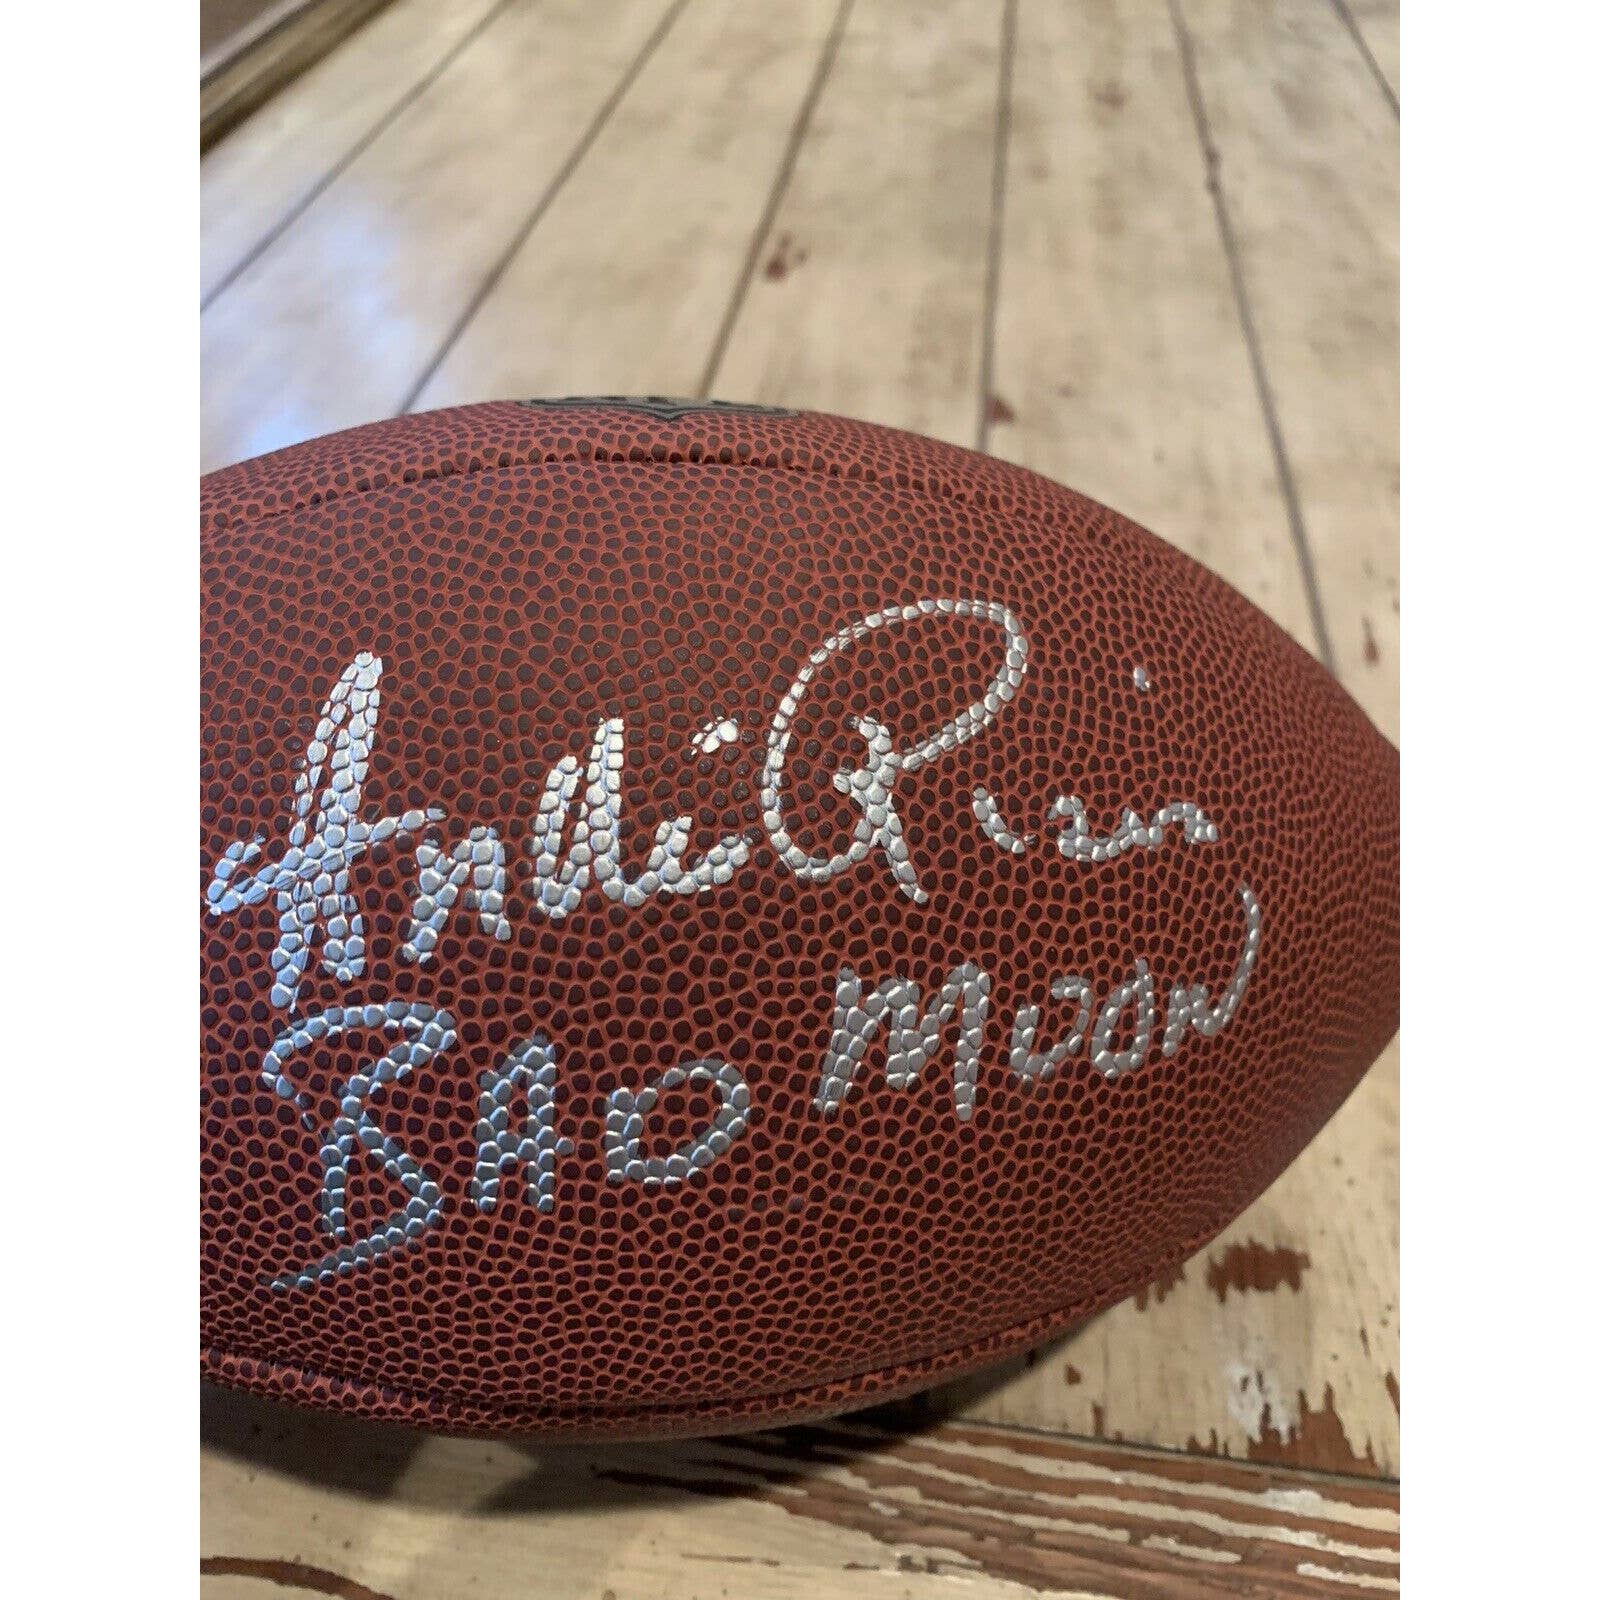 Andre Rison Autographed/Signed Football Schwartz COA Atlanta Falcons - TreasuresEvolved